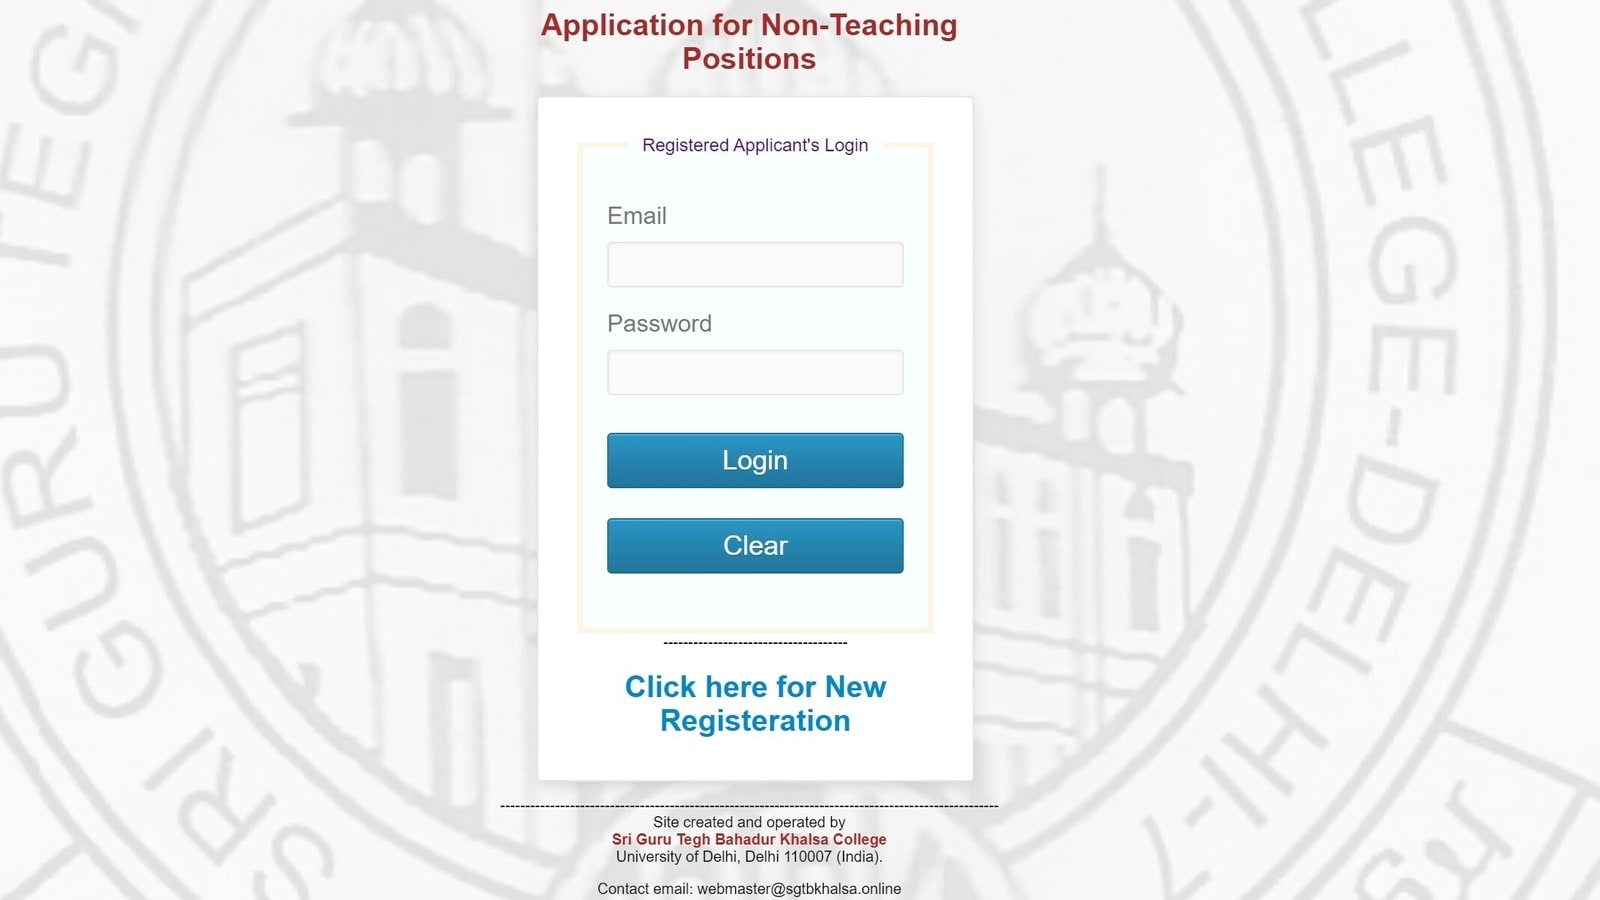 DU recruitment 2023: SGTB to recruit 54 Non-Teaching posts, details here